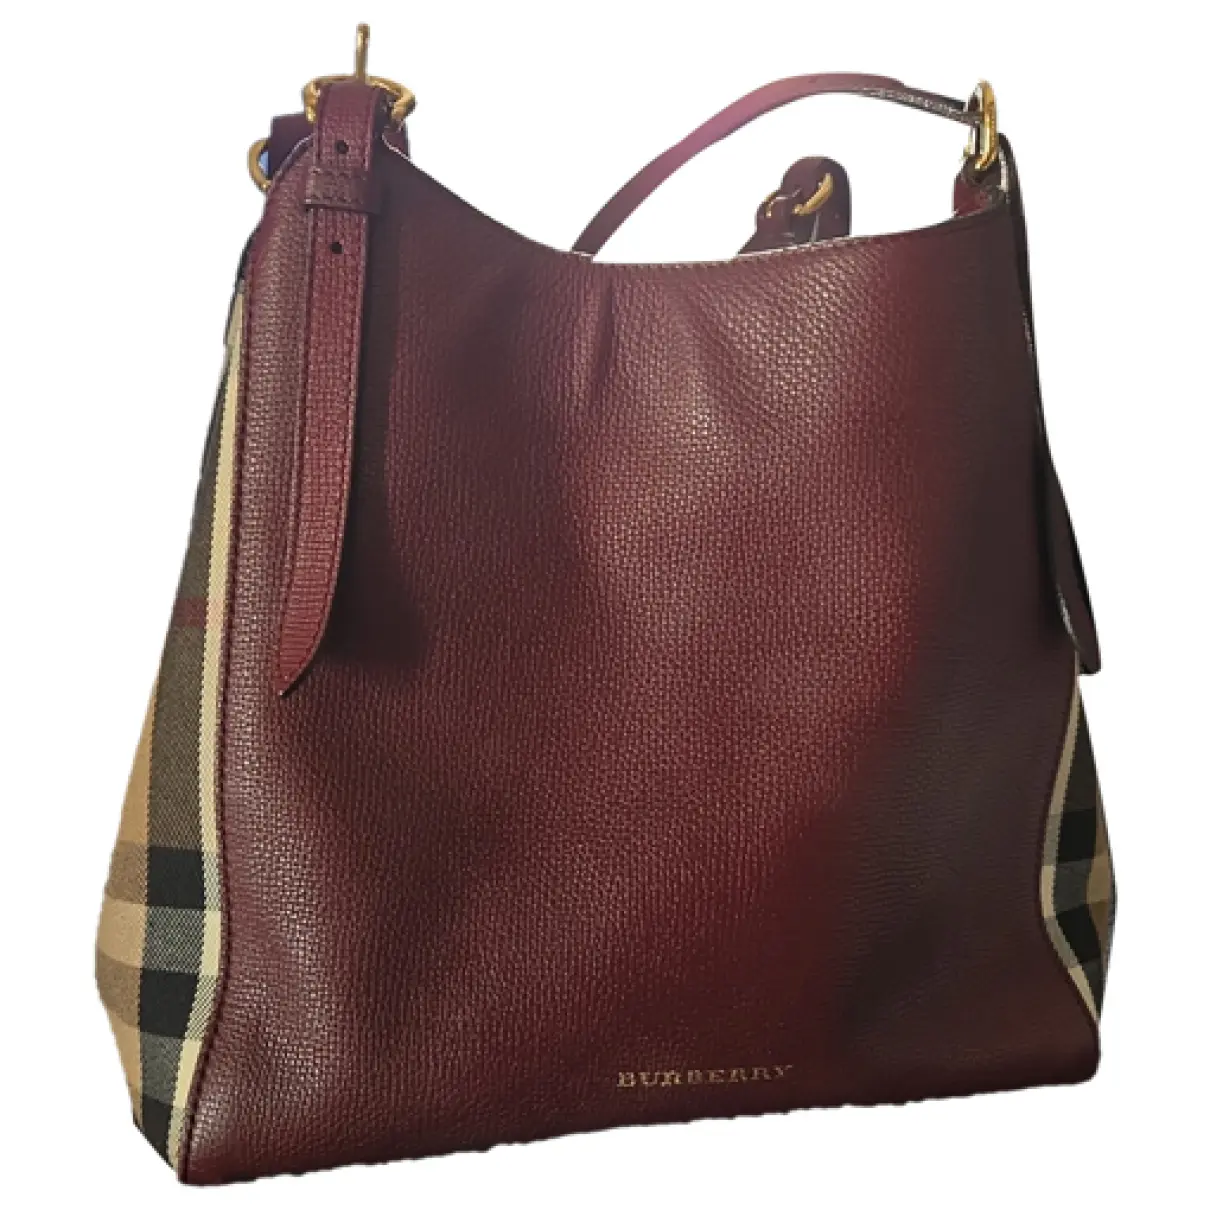 Canterbury leather handbag